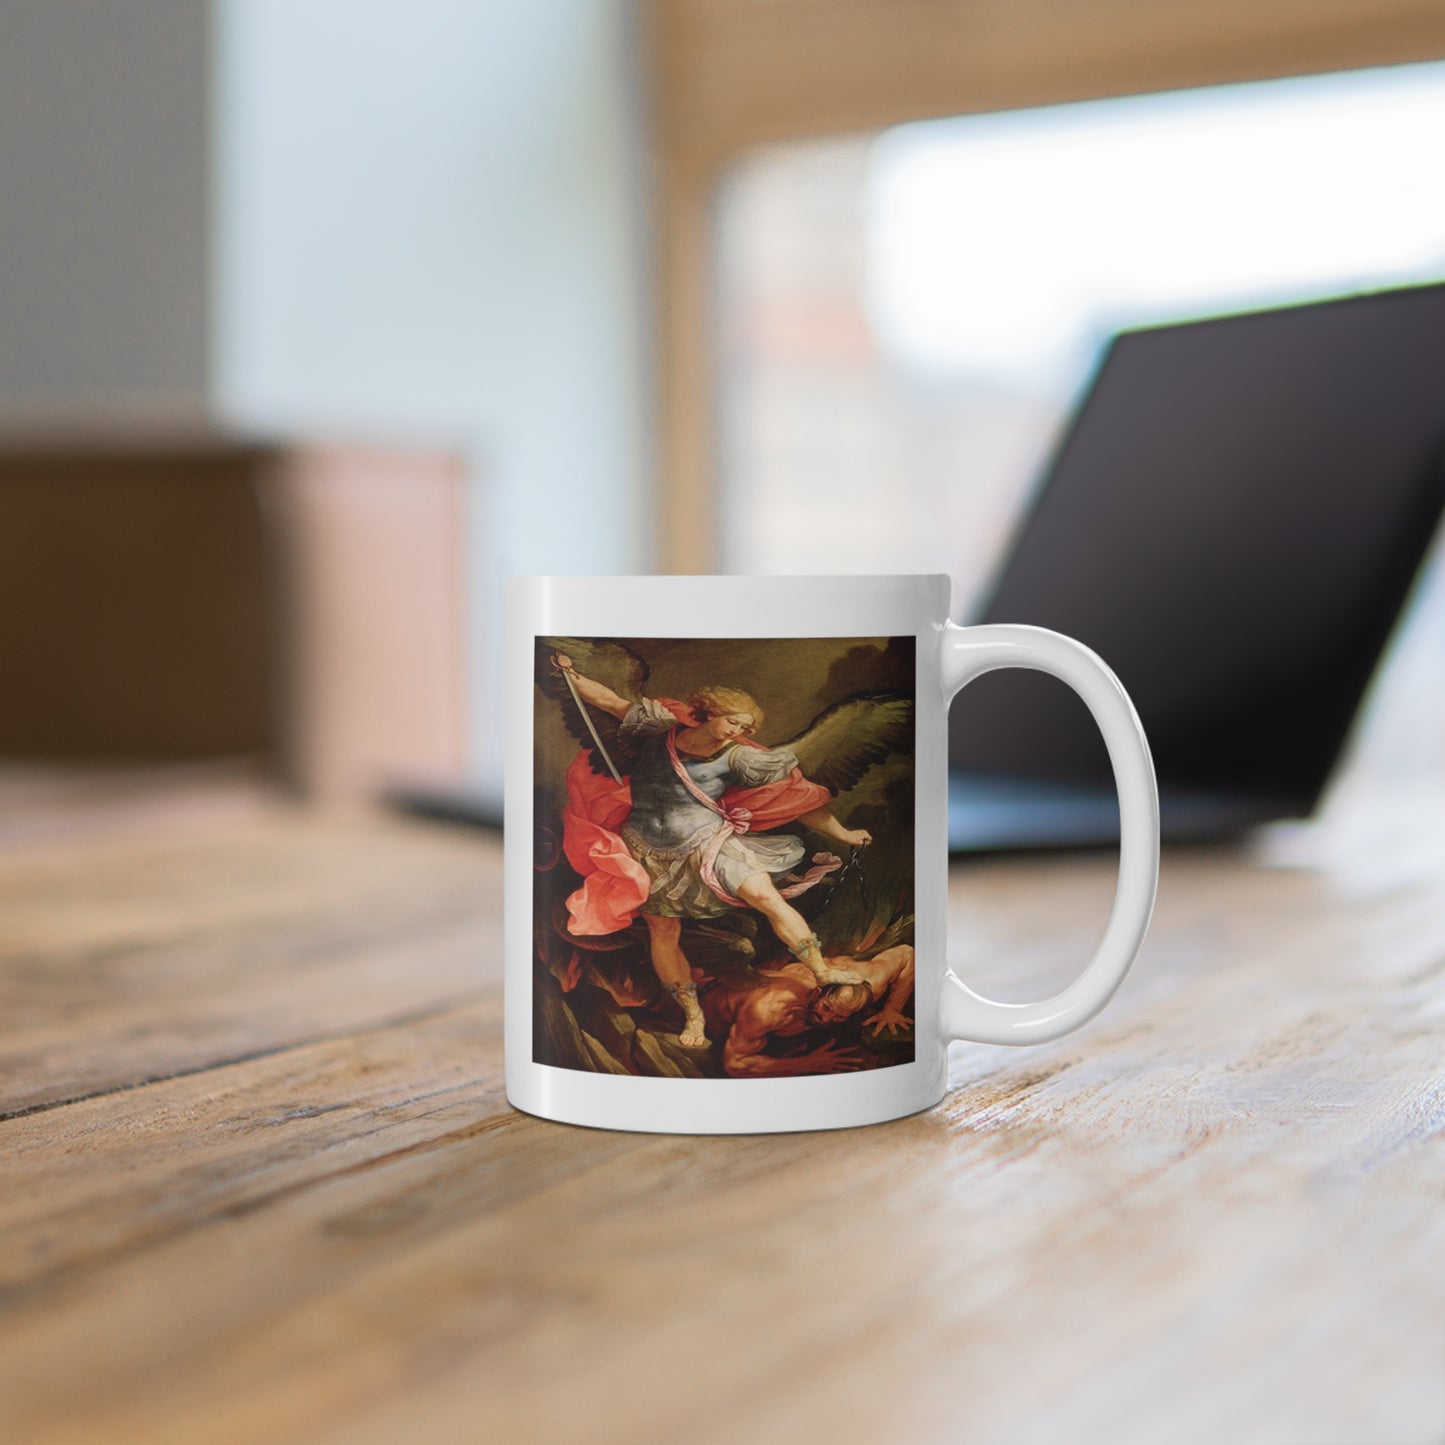 Archangel Michael Defeating Satan Coffee Mug